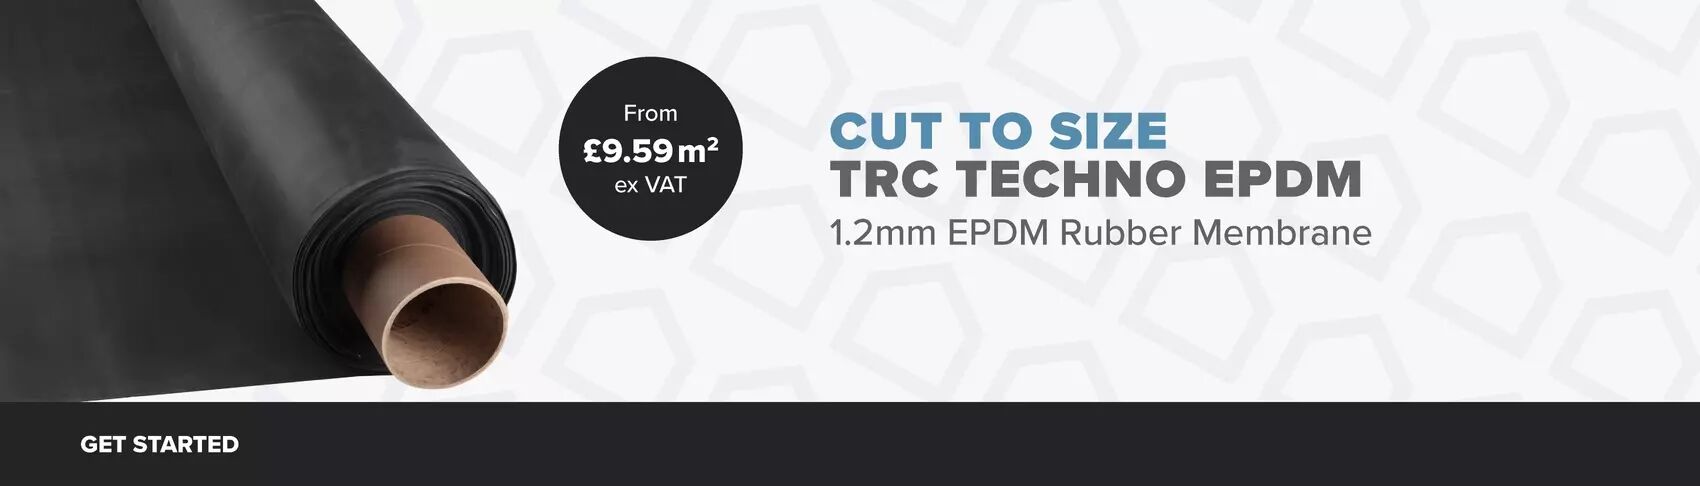 Cut To Size TRC Techno EPDM